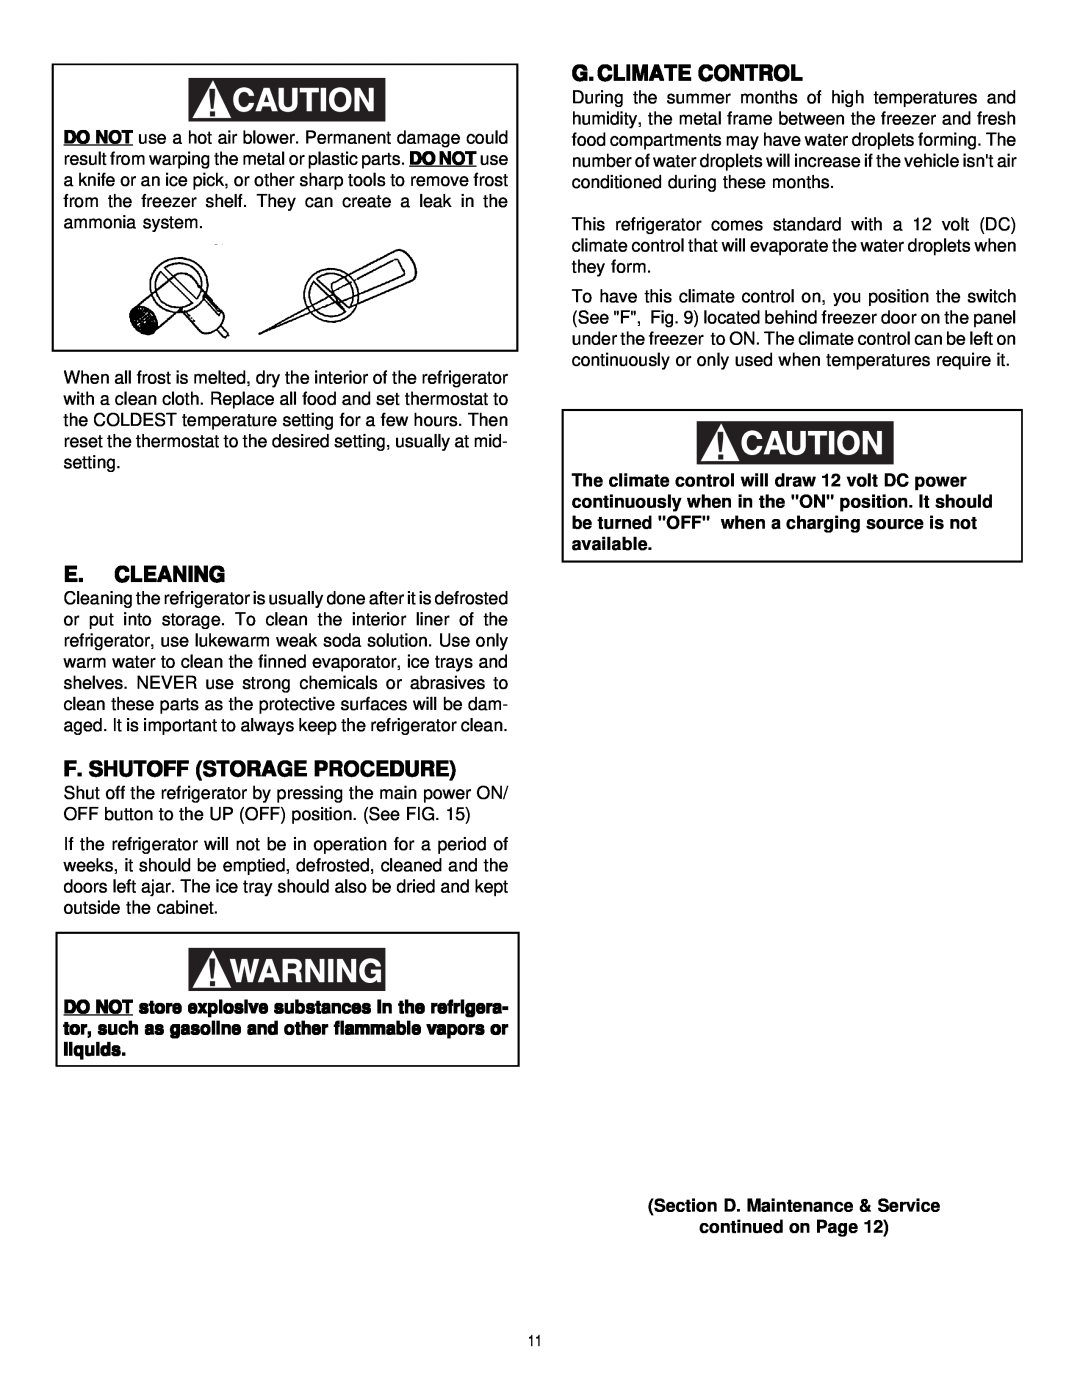 Dometic Elite RM7732 manual E. Cleaning, F. Shutoff Storage Procedure, G. Climate Control 